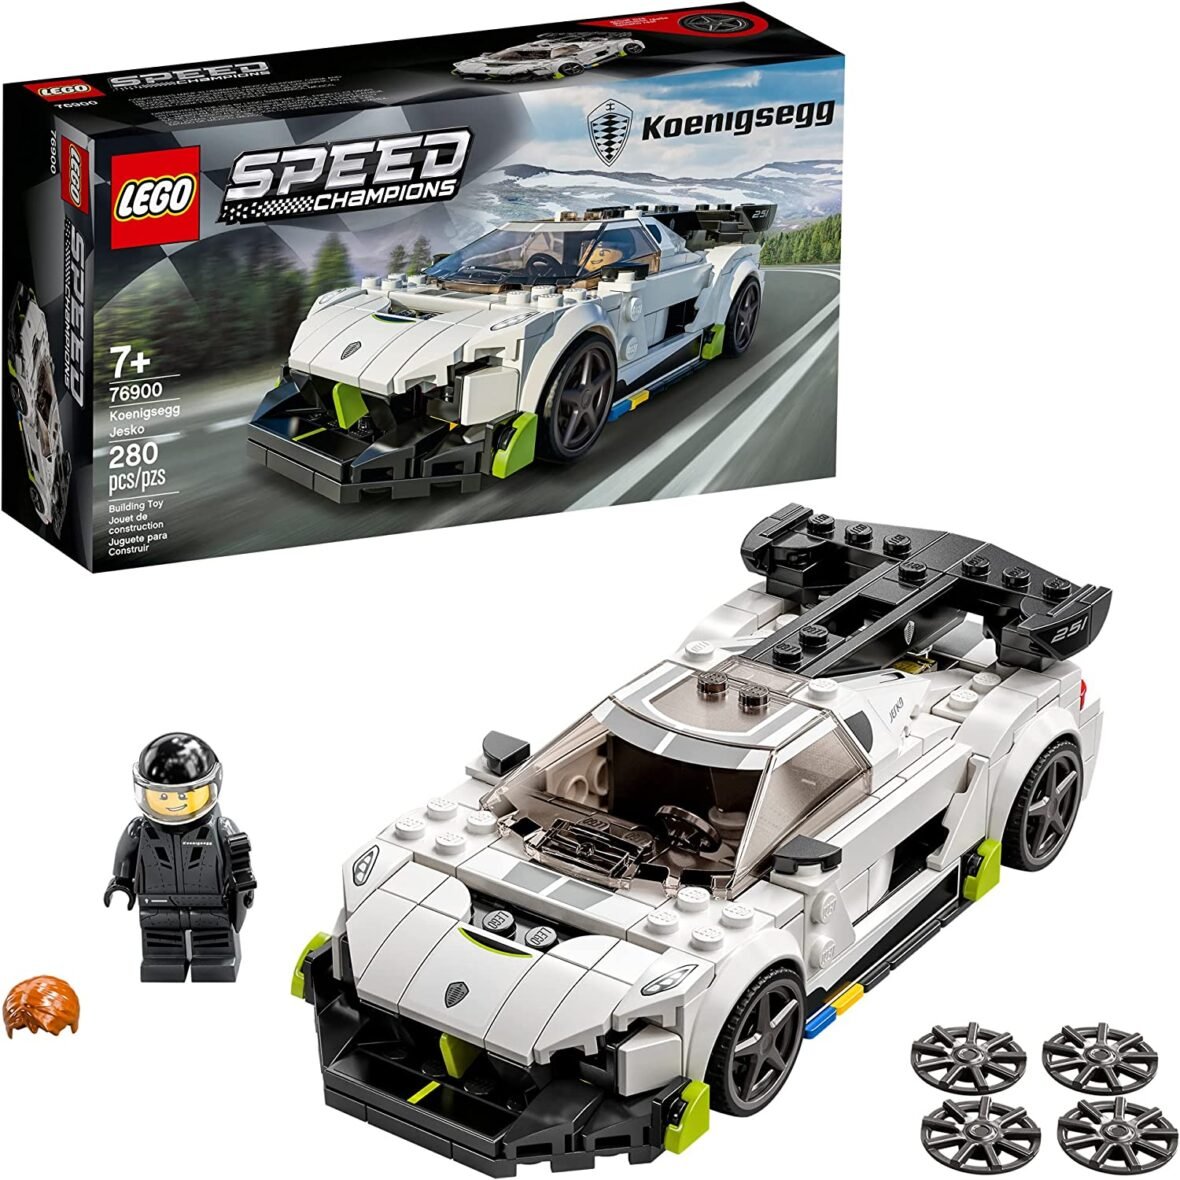 LEGO Speed Champions Koenigsegg Jesko 76900 Building Toy (280 Pieces)